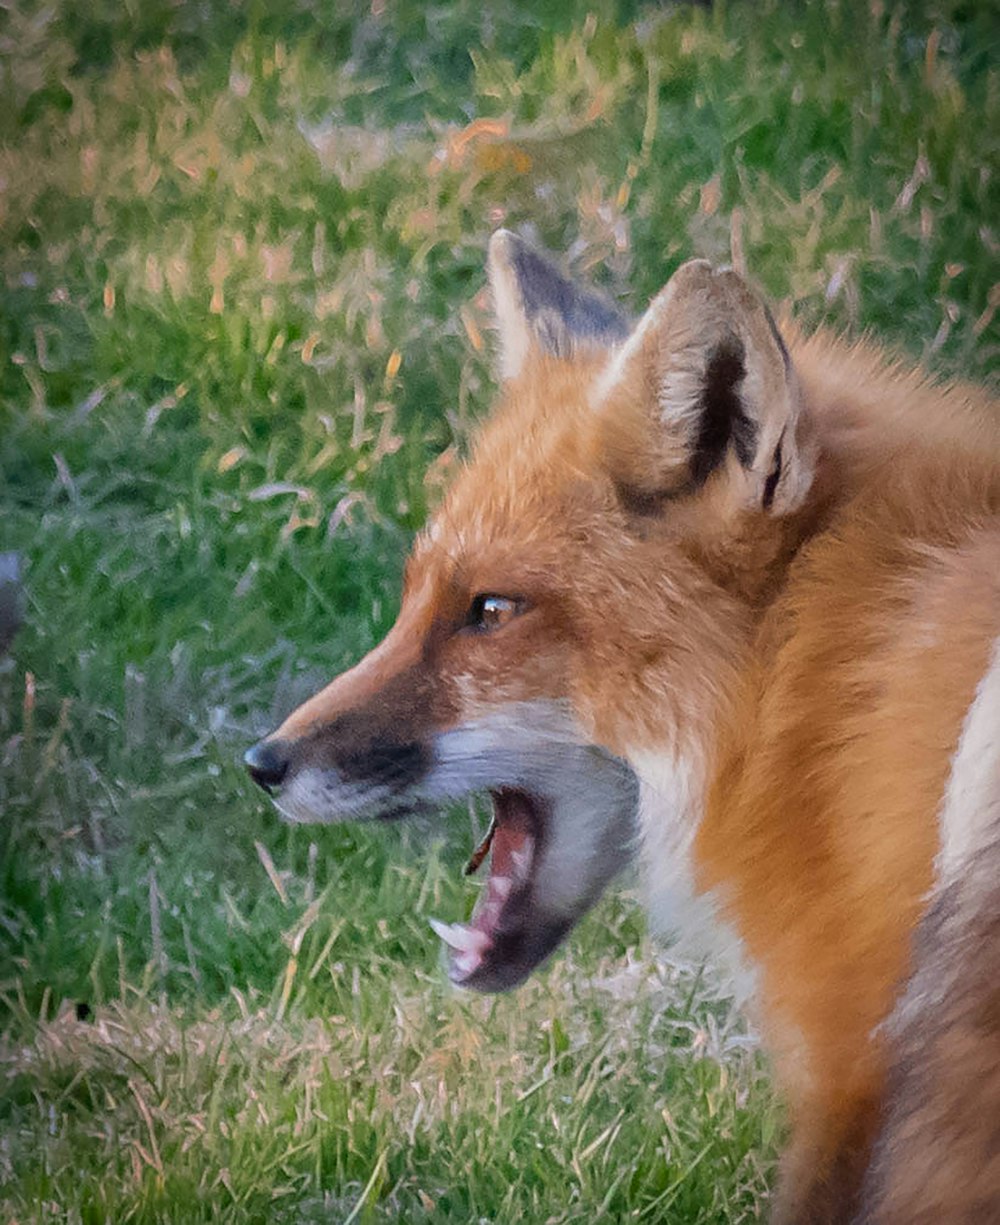 a red fox yawns in a grassy field